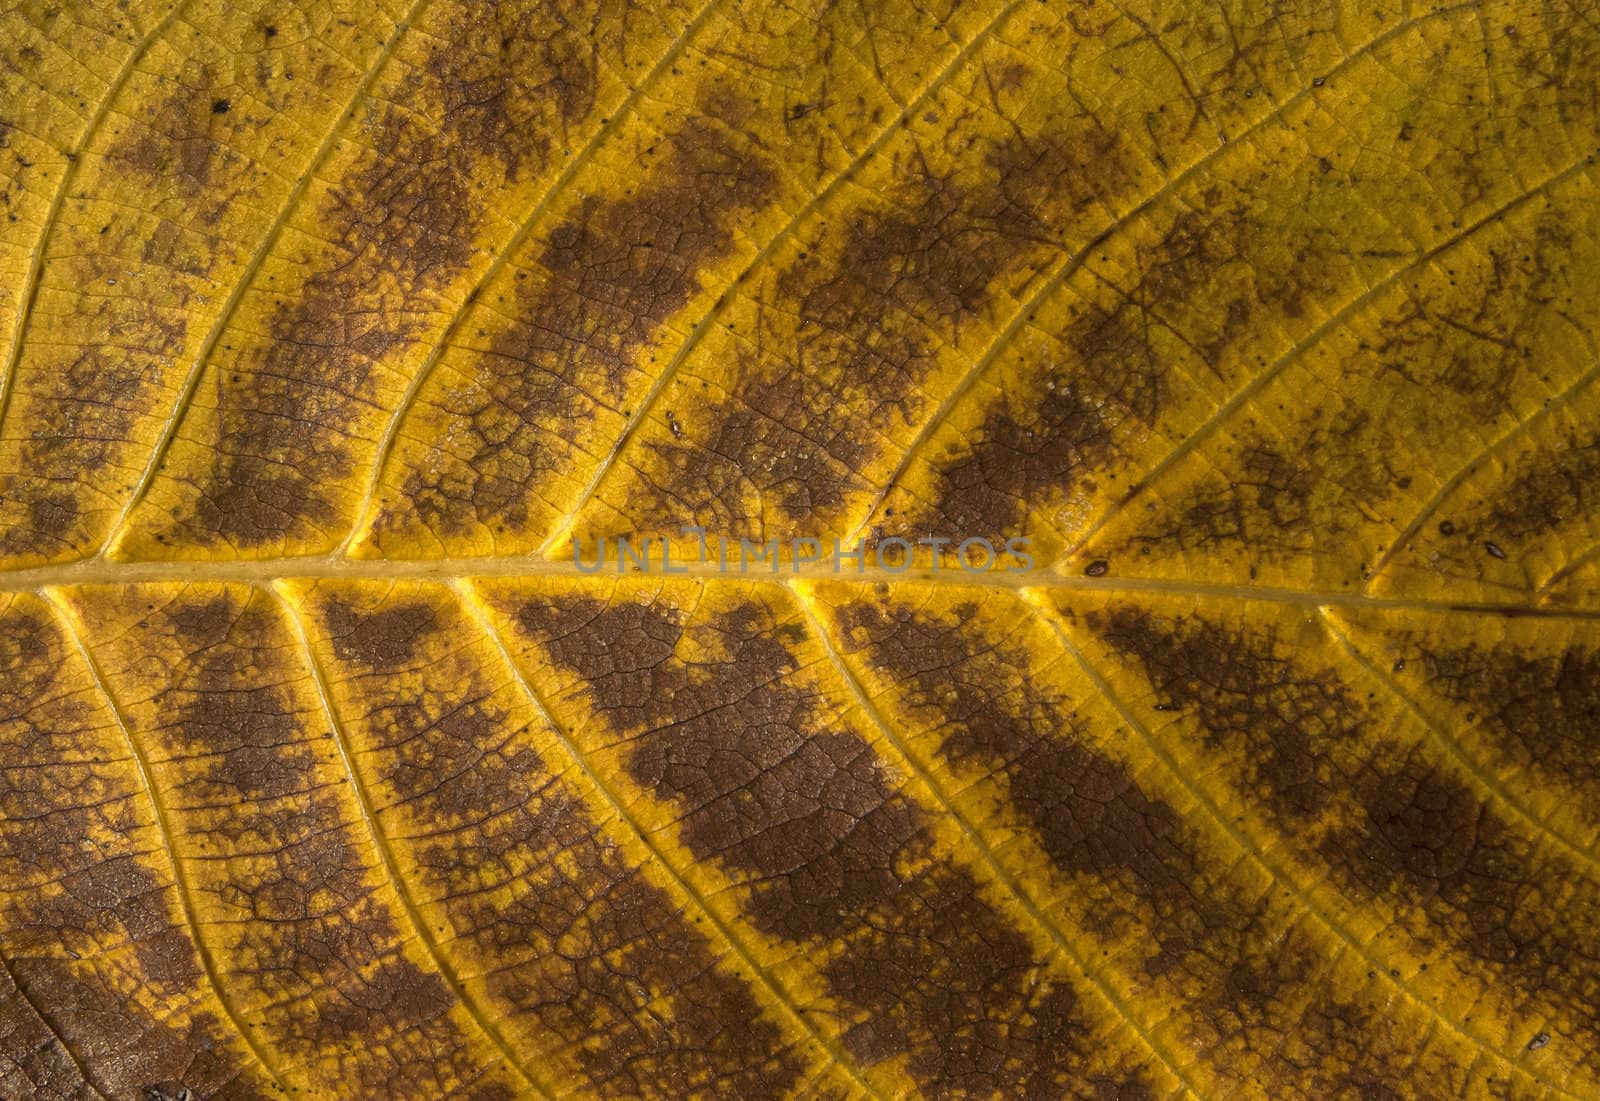 Autumn leaf structure by varbenov